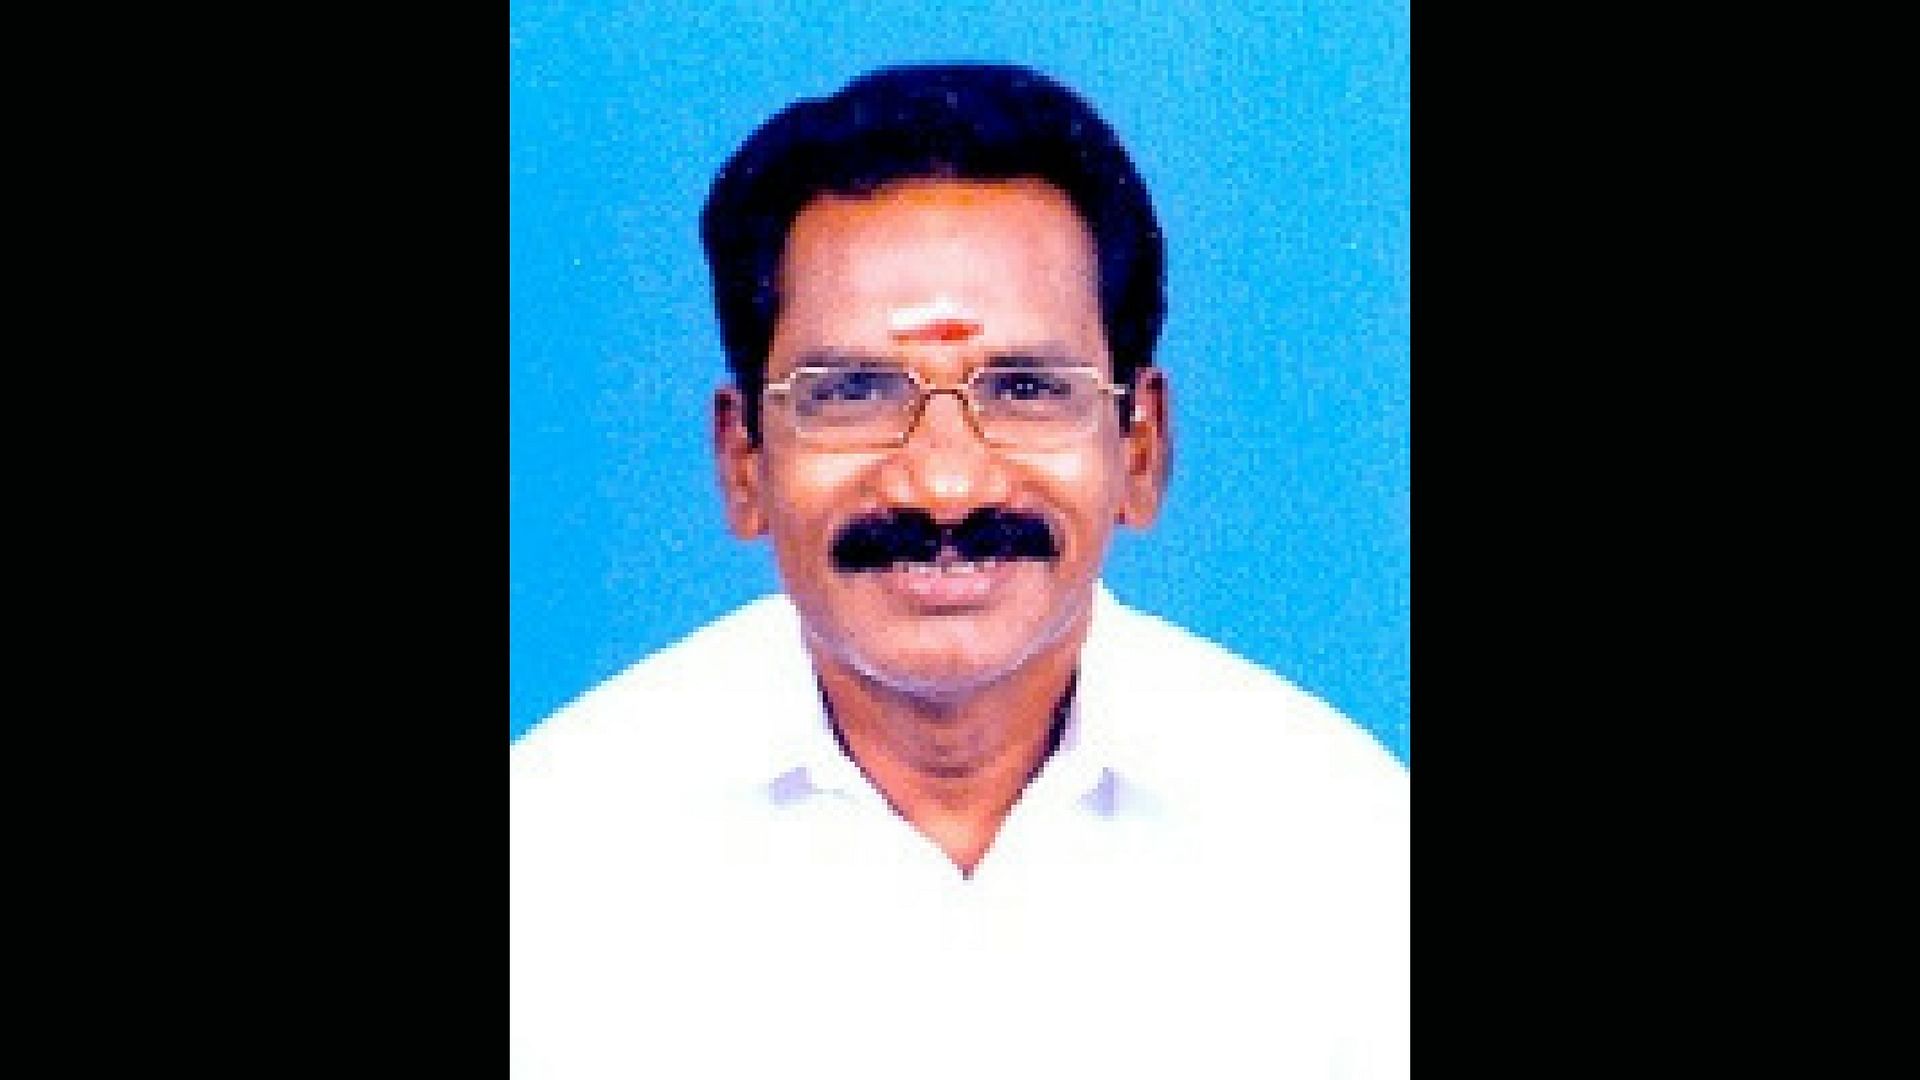 Tamil Nadu Minister for Cooperation Sellur K Raju